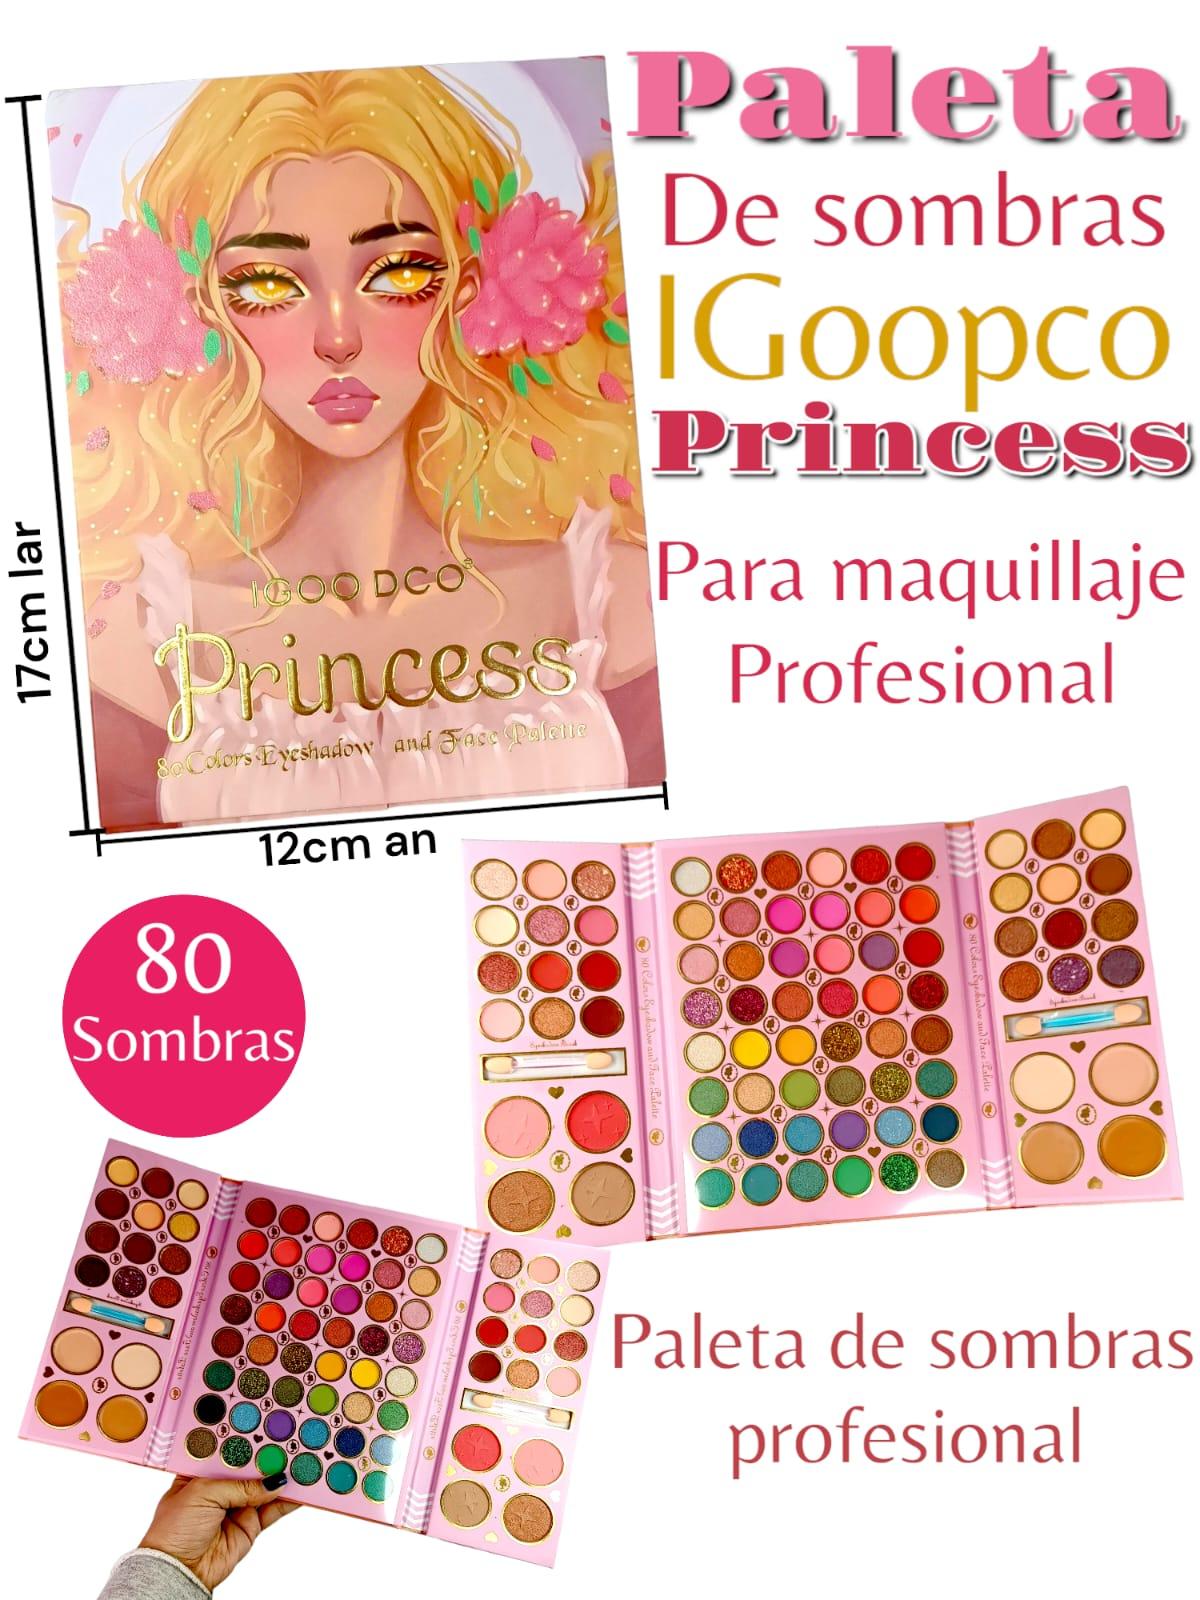 Paleta de Sombras IGOOPCO Princess Para Maquillaje Profesional 17cm